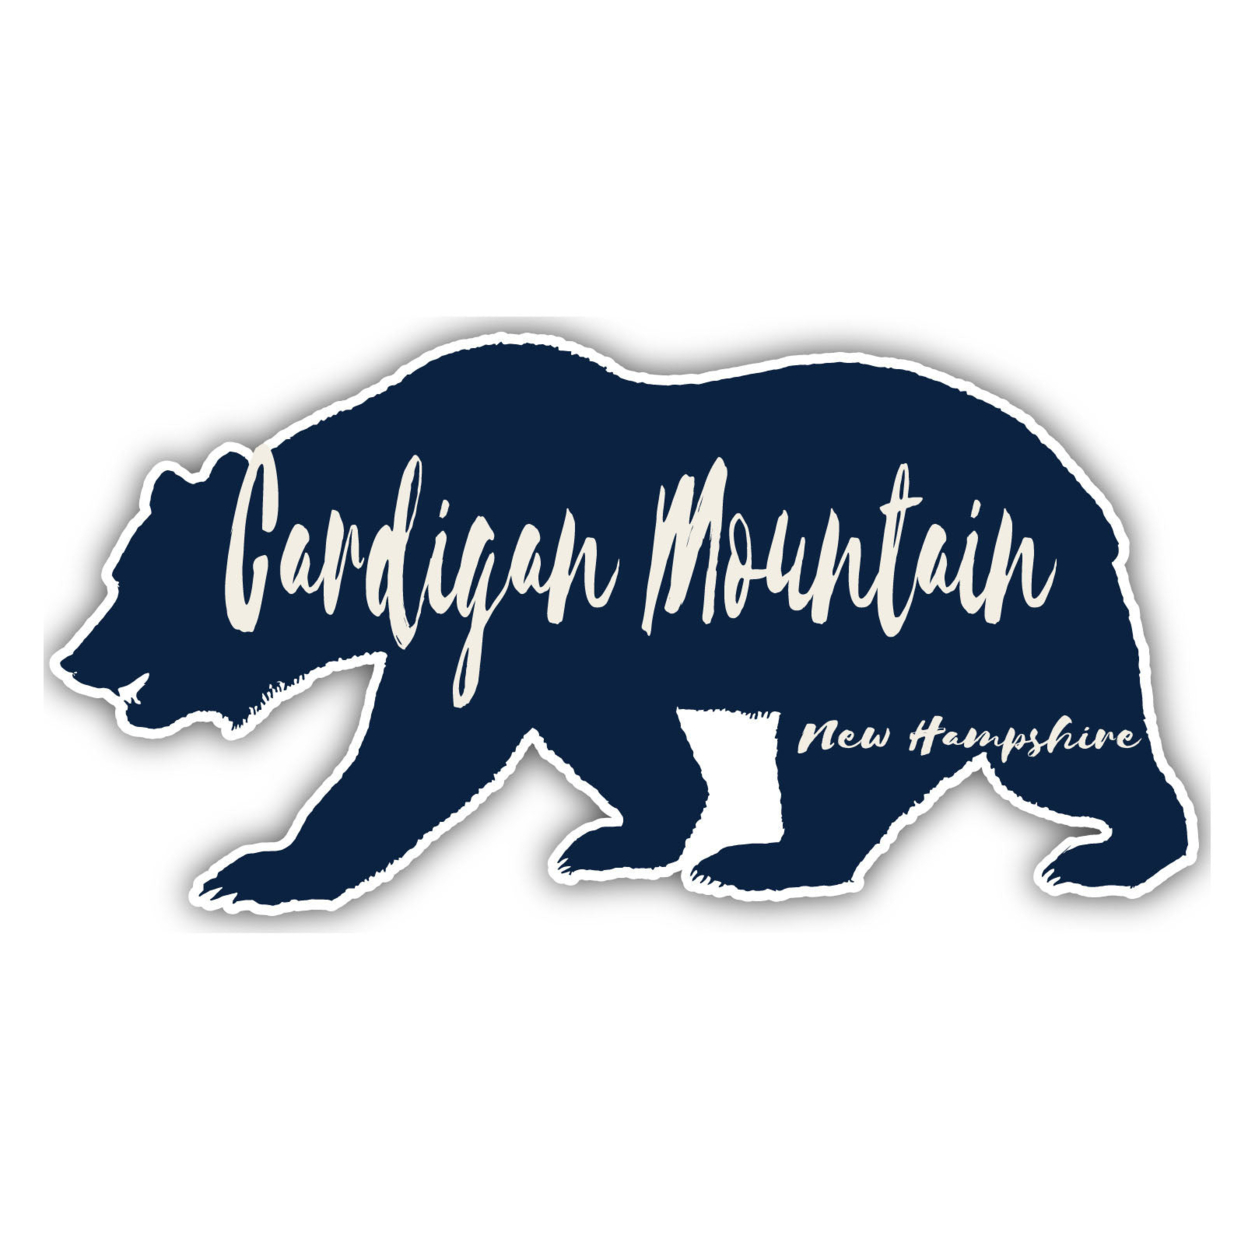 Cardigan Mountain New Hampshire Souvenir Decorative Stickers (Choose Theme And Size) - Single Unit, 12-Inch, Bear